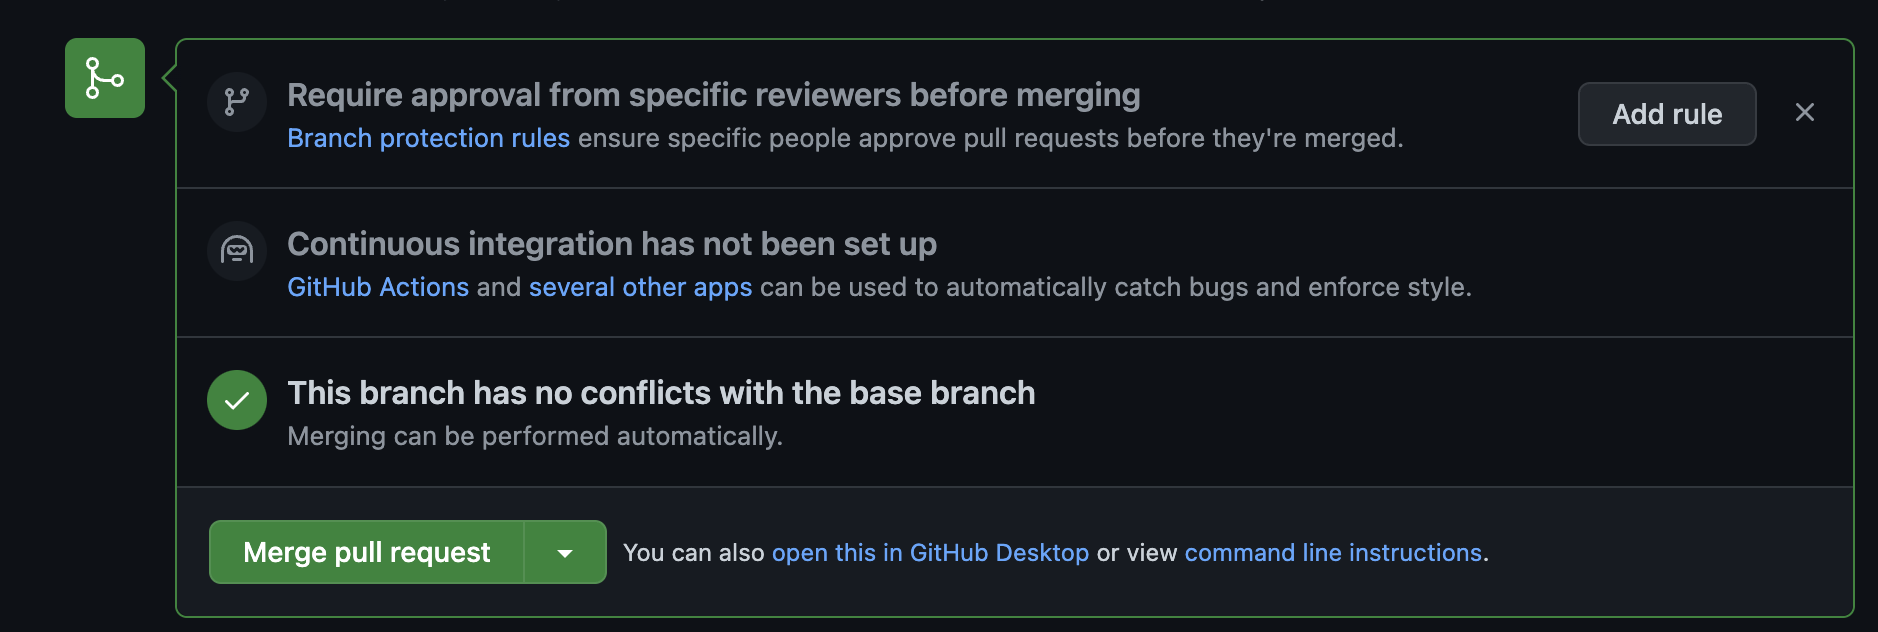 Github merge pull request